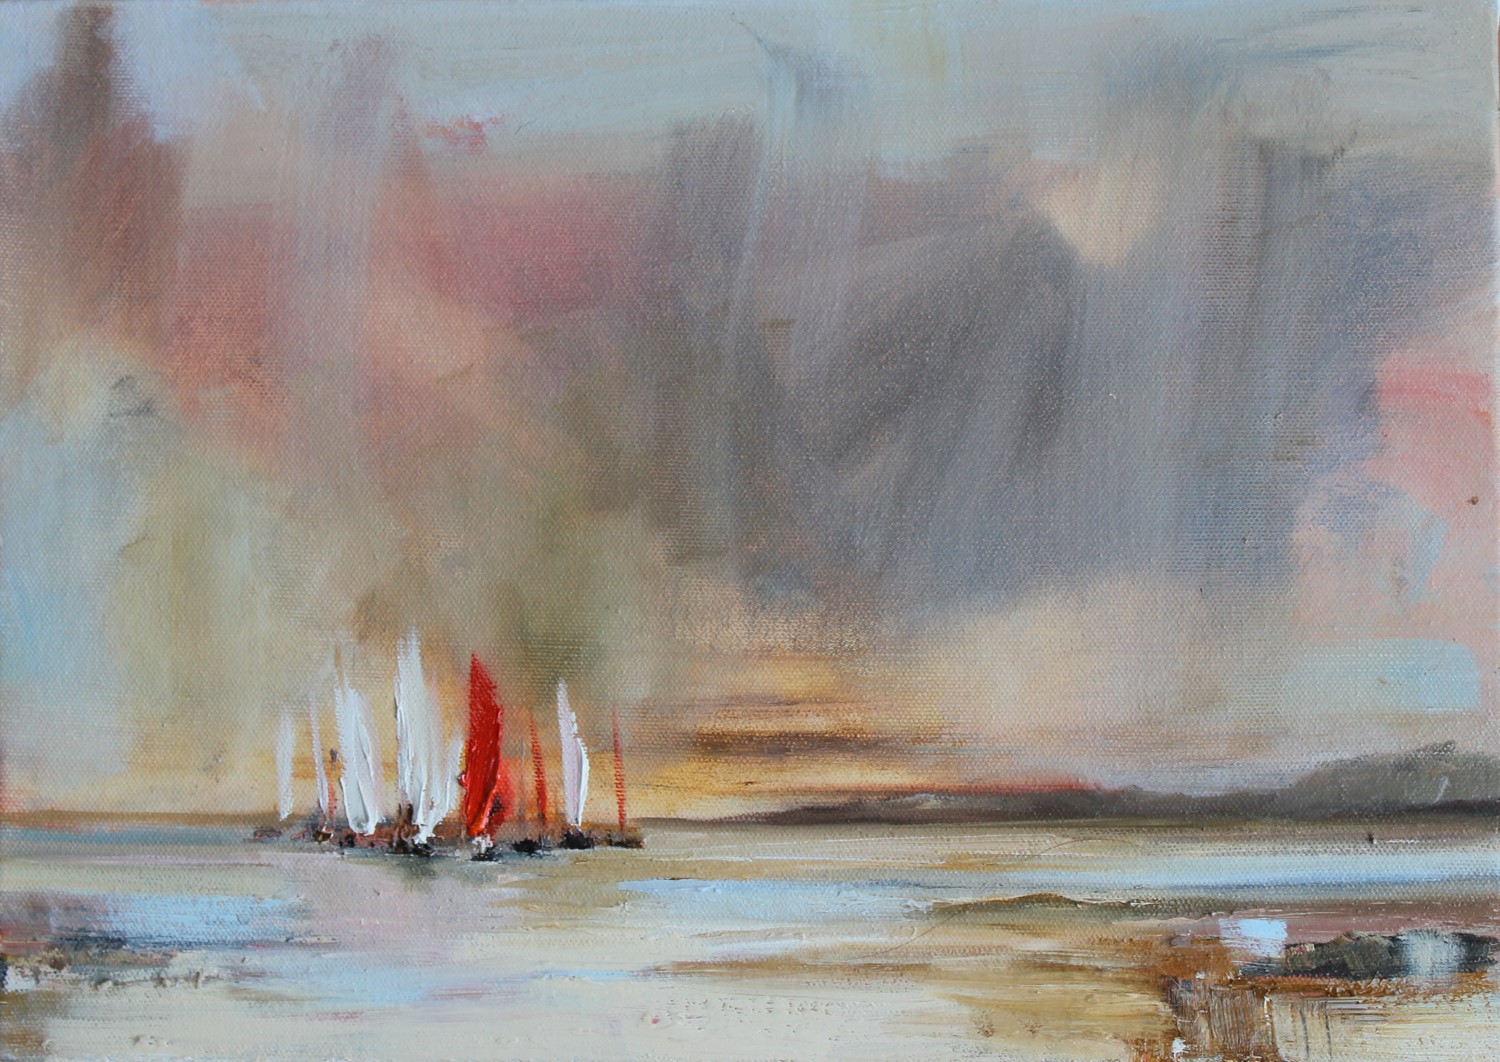 'Sails after a Storm' by artist Rosanne Barr